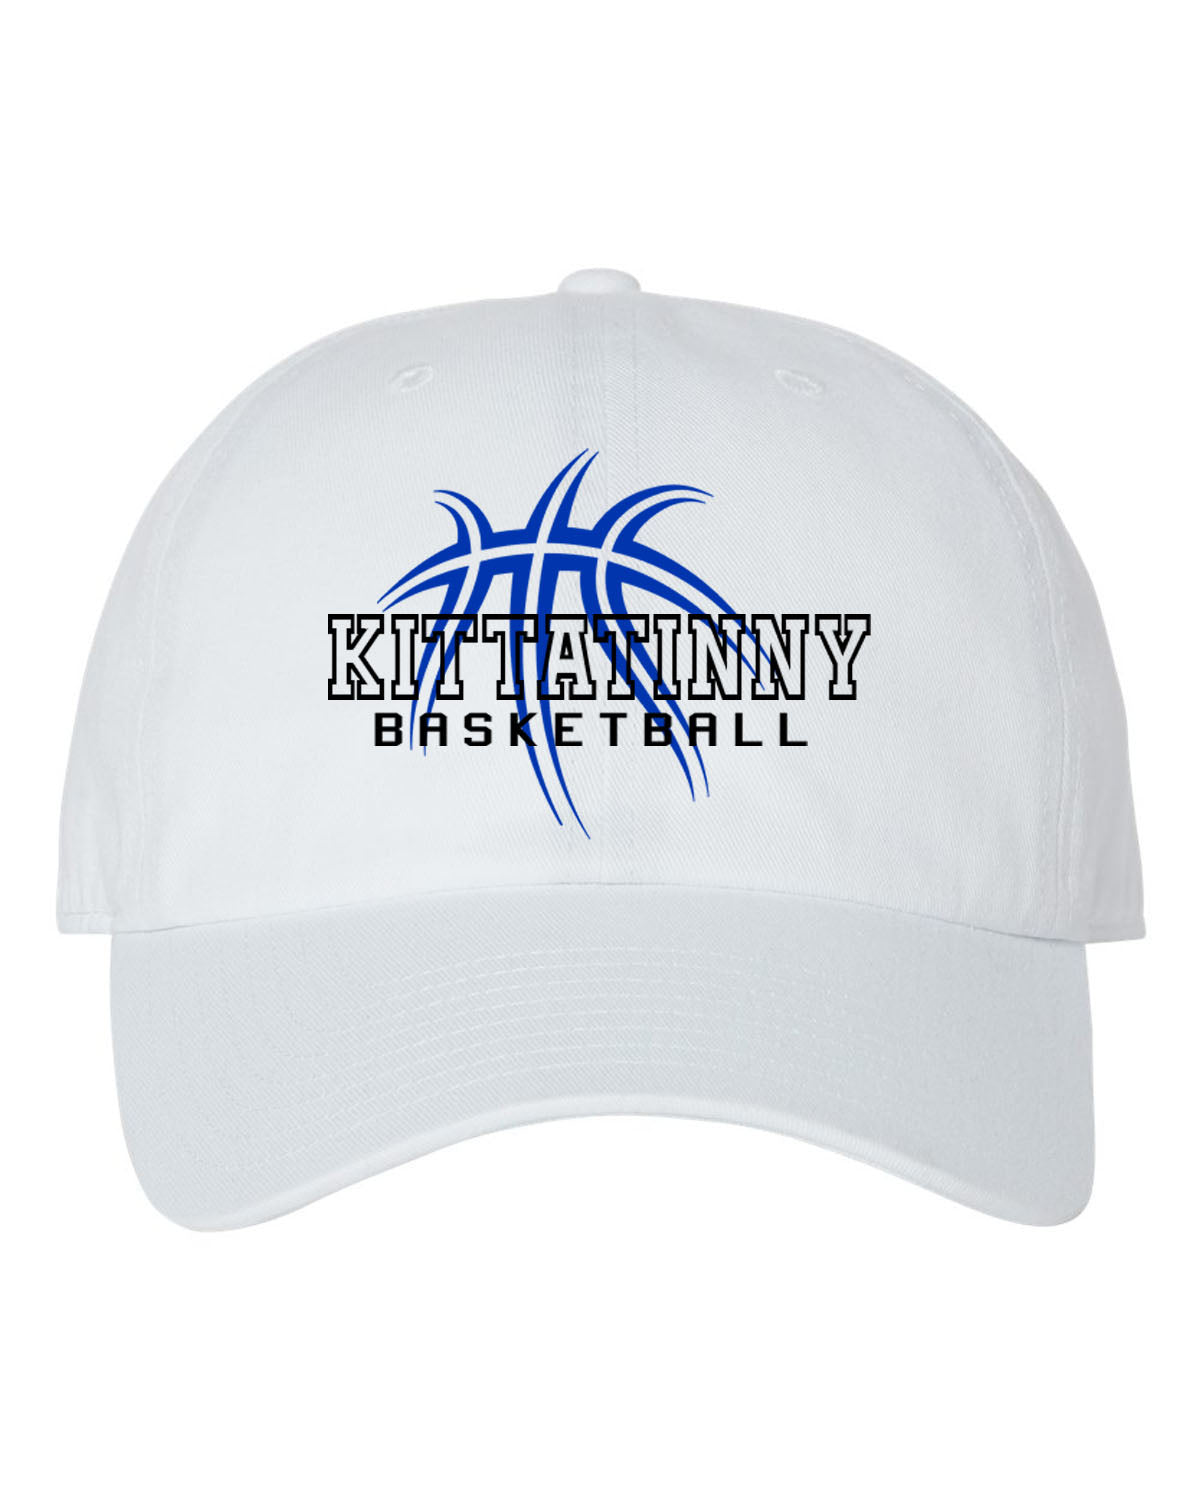 Kittatinny Basketball Design 4 Trucker Hat